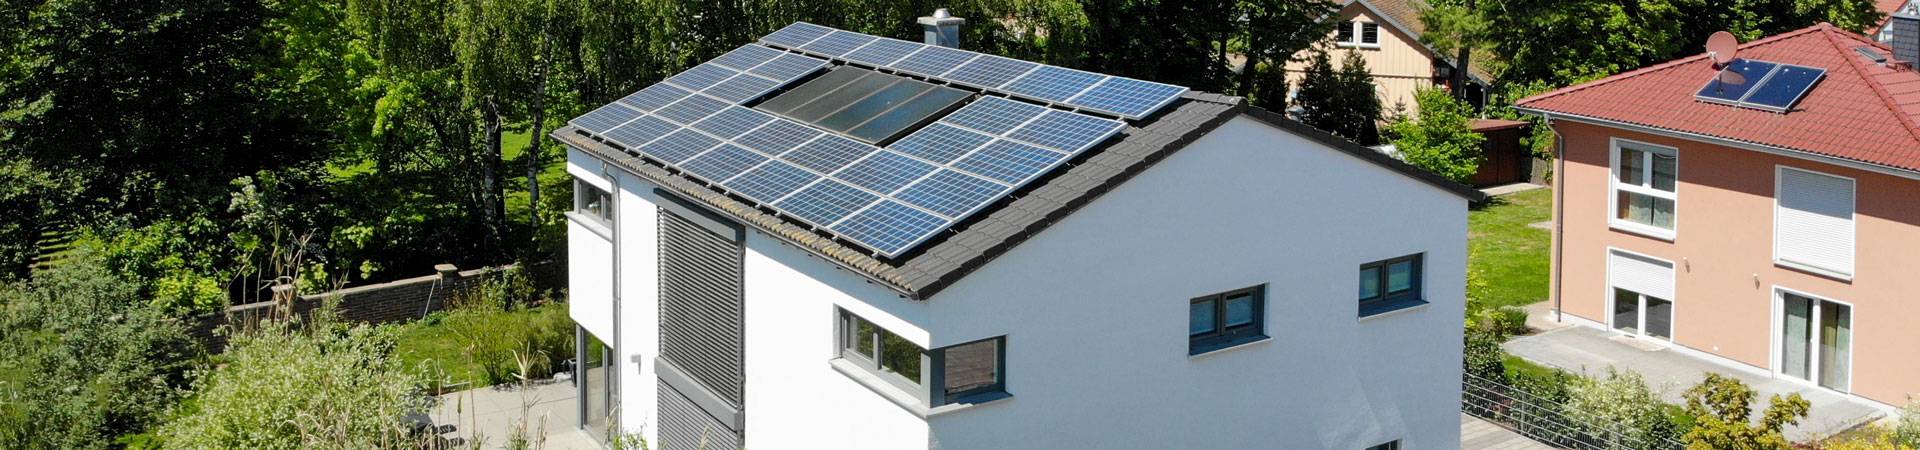 photovoltaik hellweg-sauerland